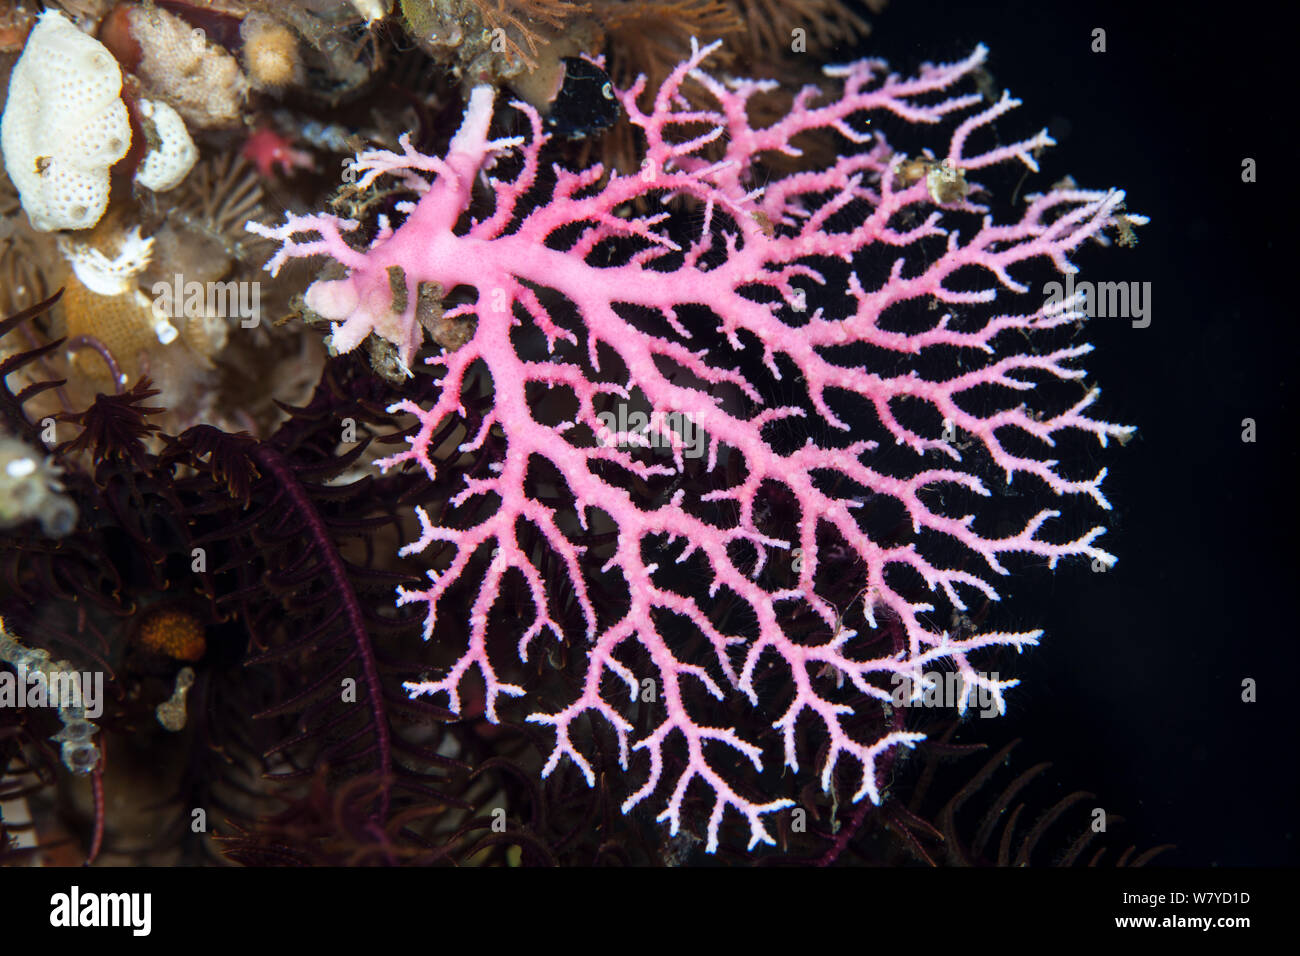 Hydroid coral (Errina dendyi) in Dusky Sound, Fiordland National Park, New Zealand. Stock Photo